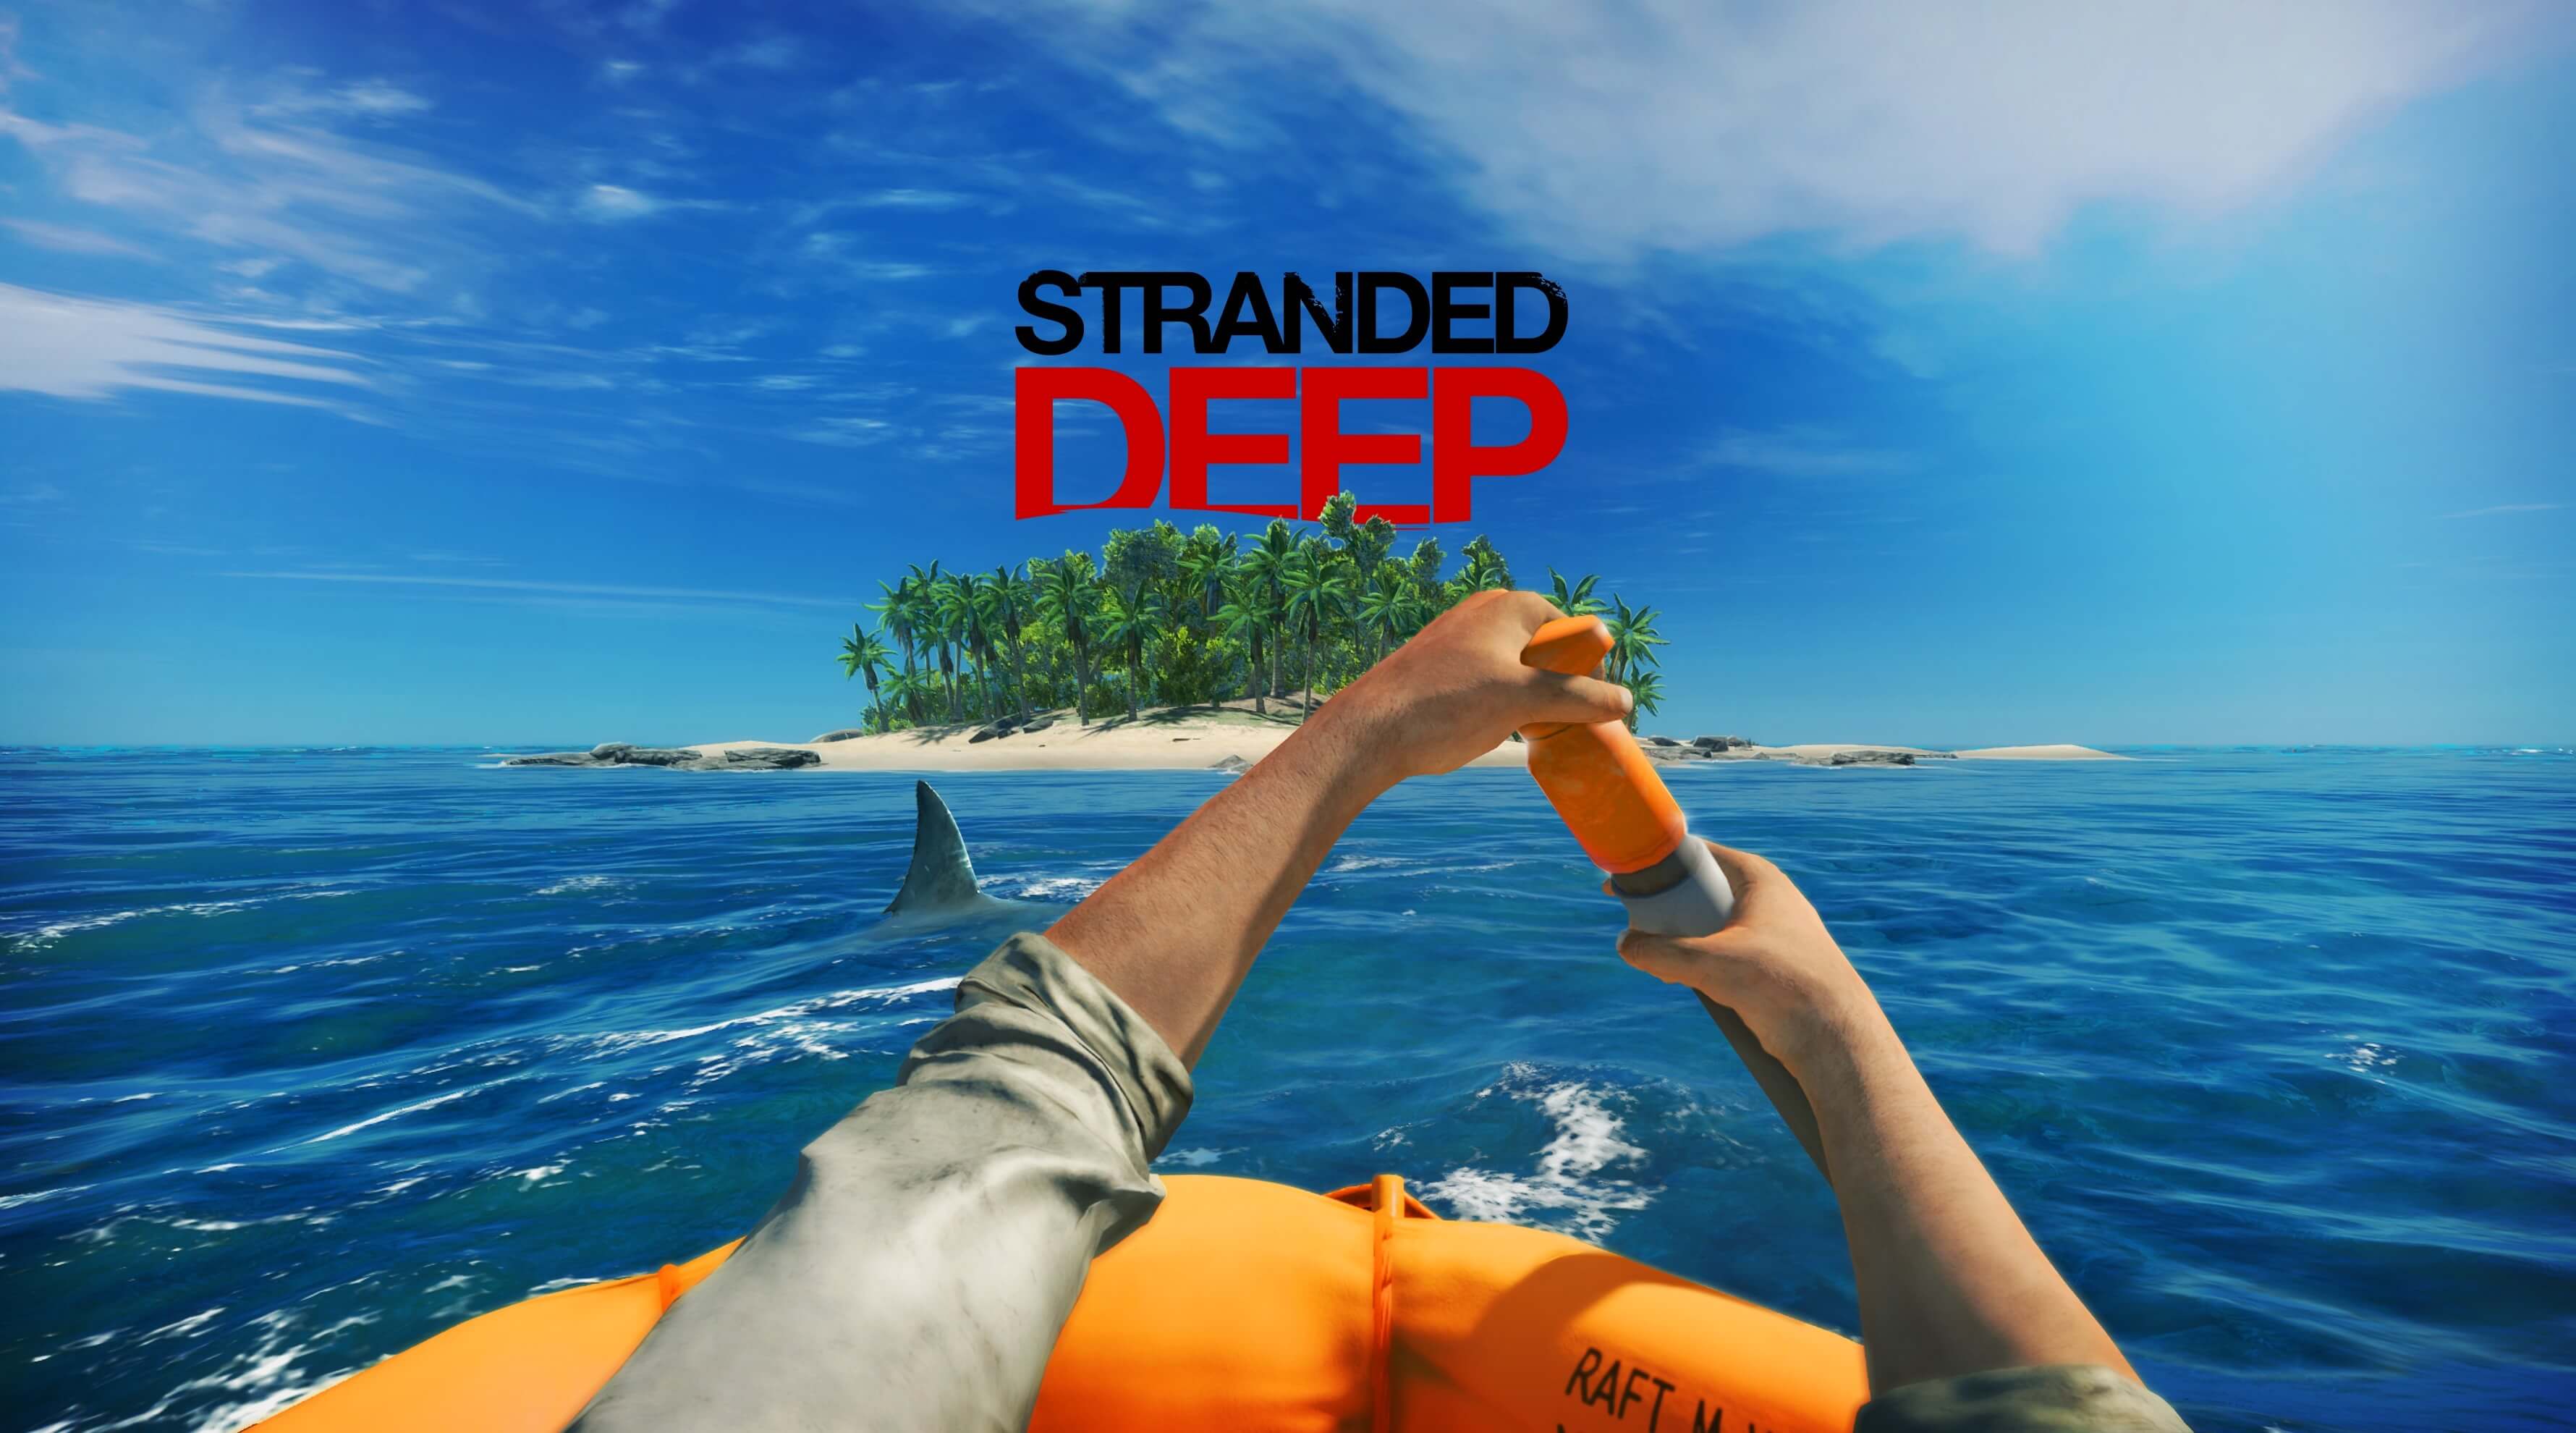 Download Stranded Deep In The Desert Wallpaper